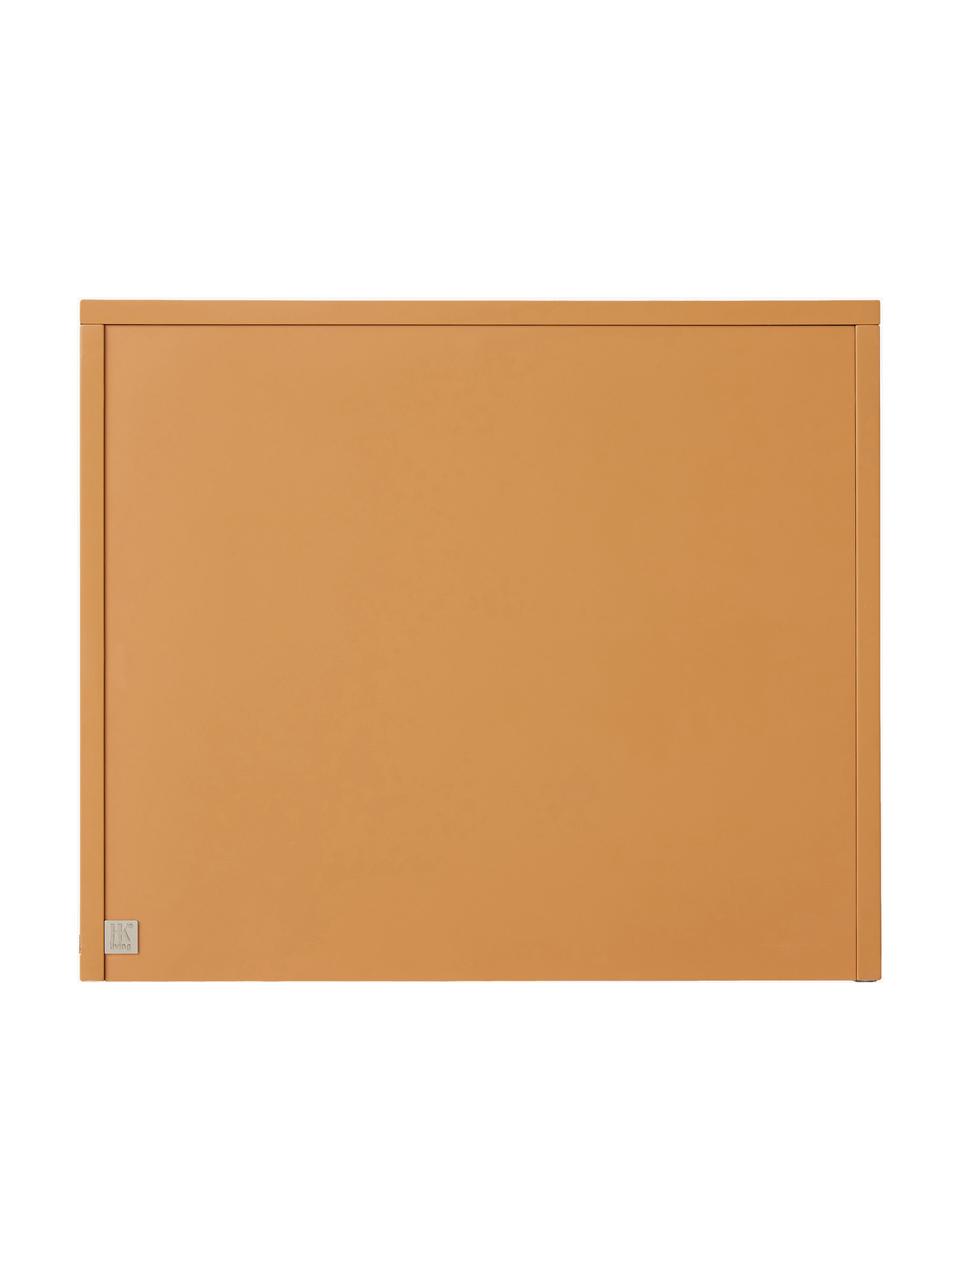 Table de chevet Ginger Orange, MDF, Brun clair, larg. 60 x prof. 51 cm